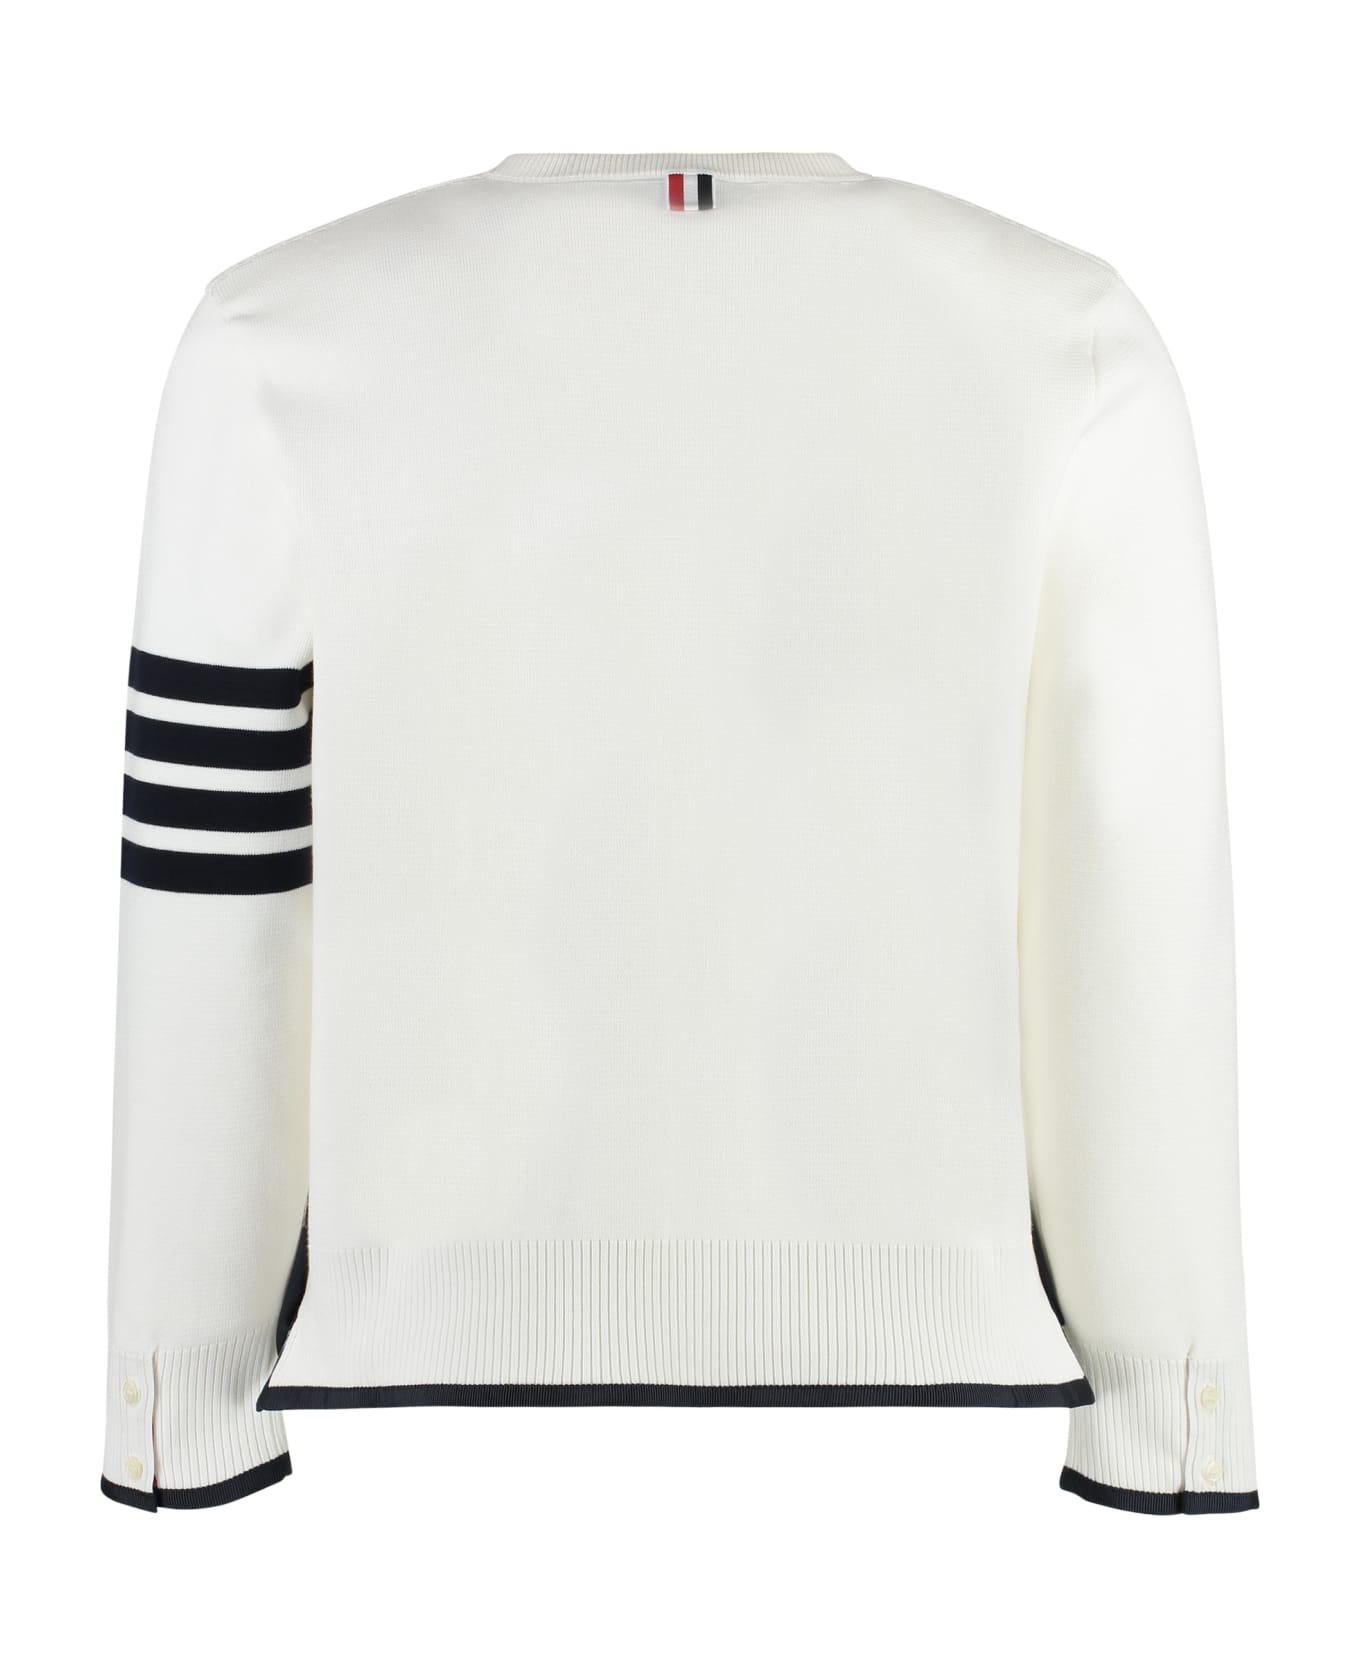 Thom Browne Cotton Crew-neck Sweater - White